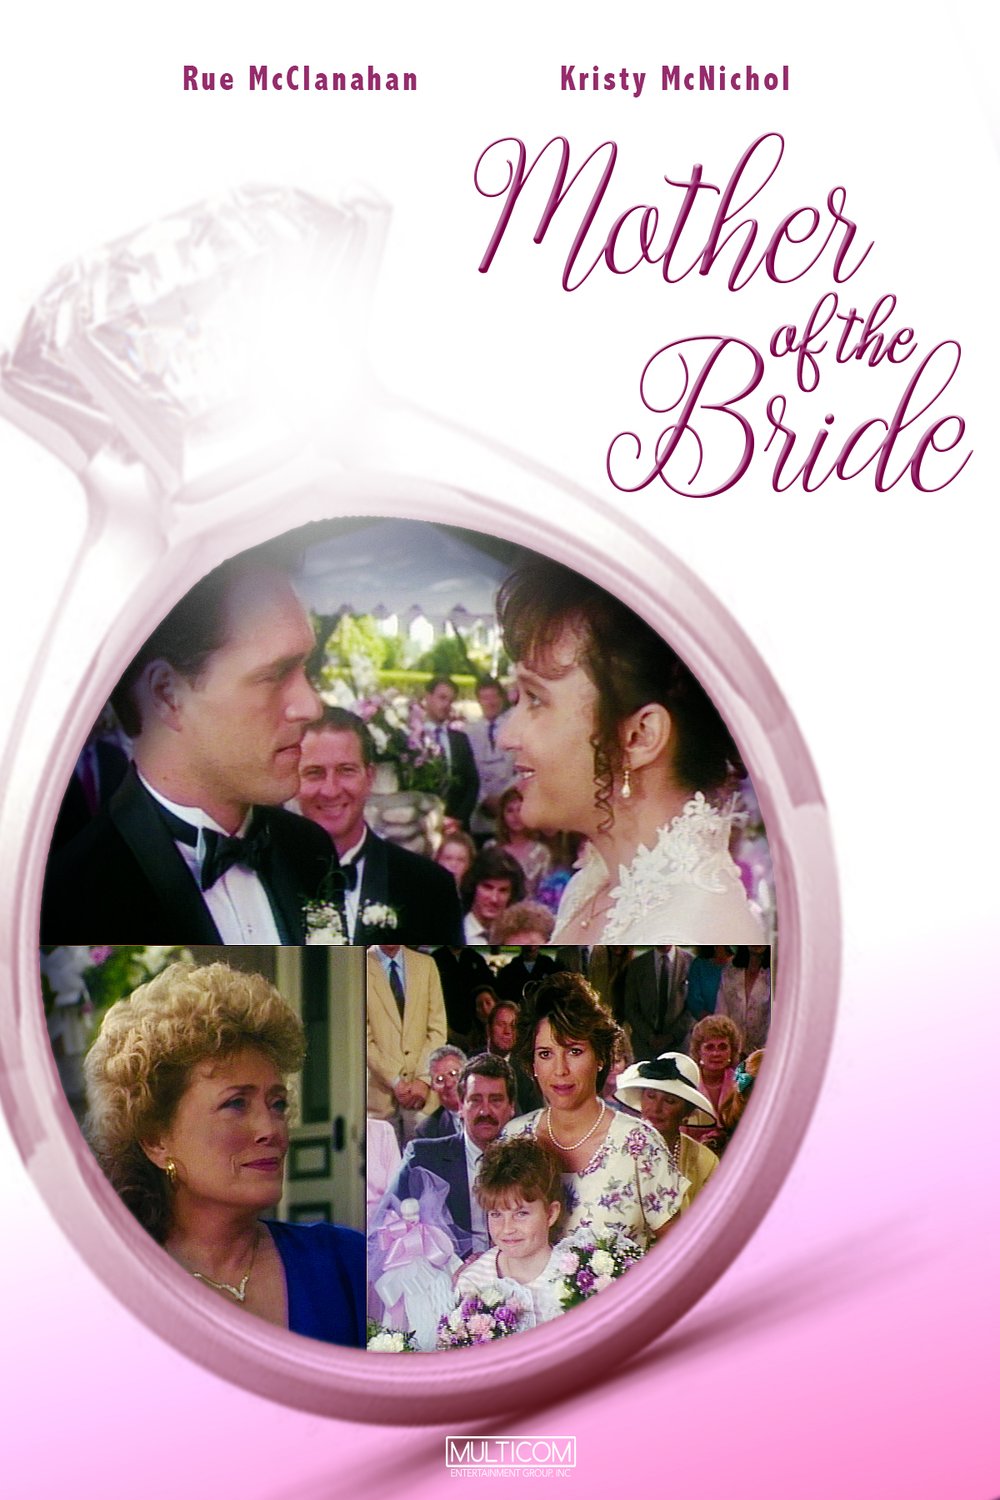 L'affiche du film Mother of the Bride